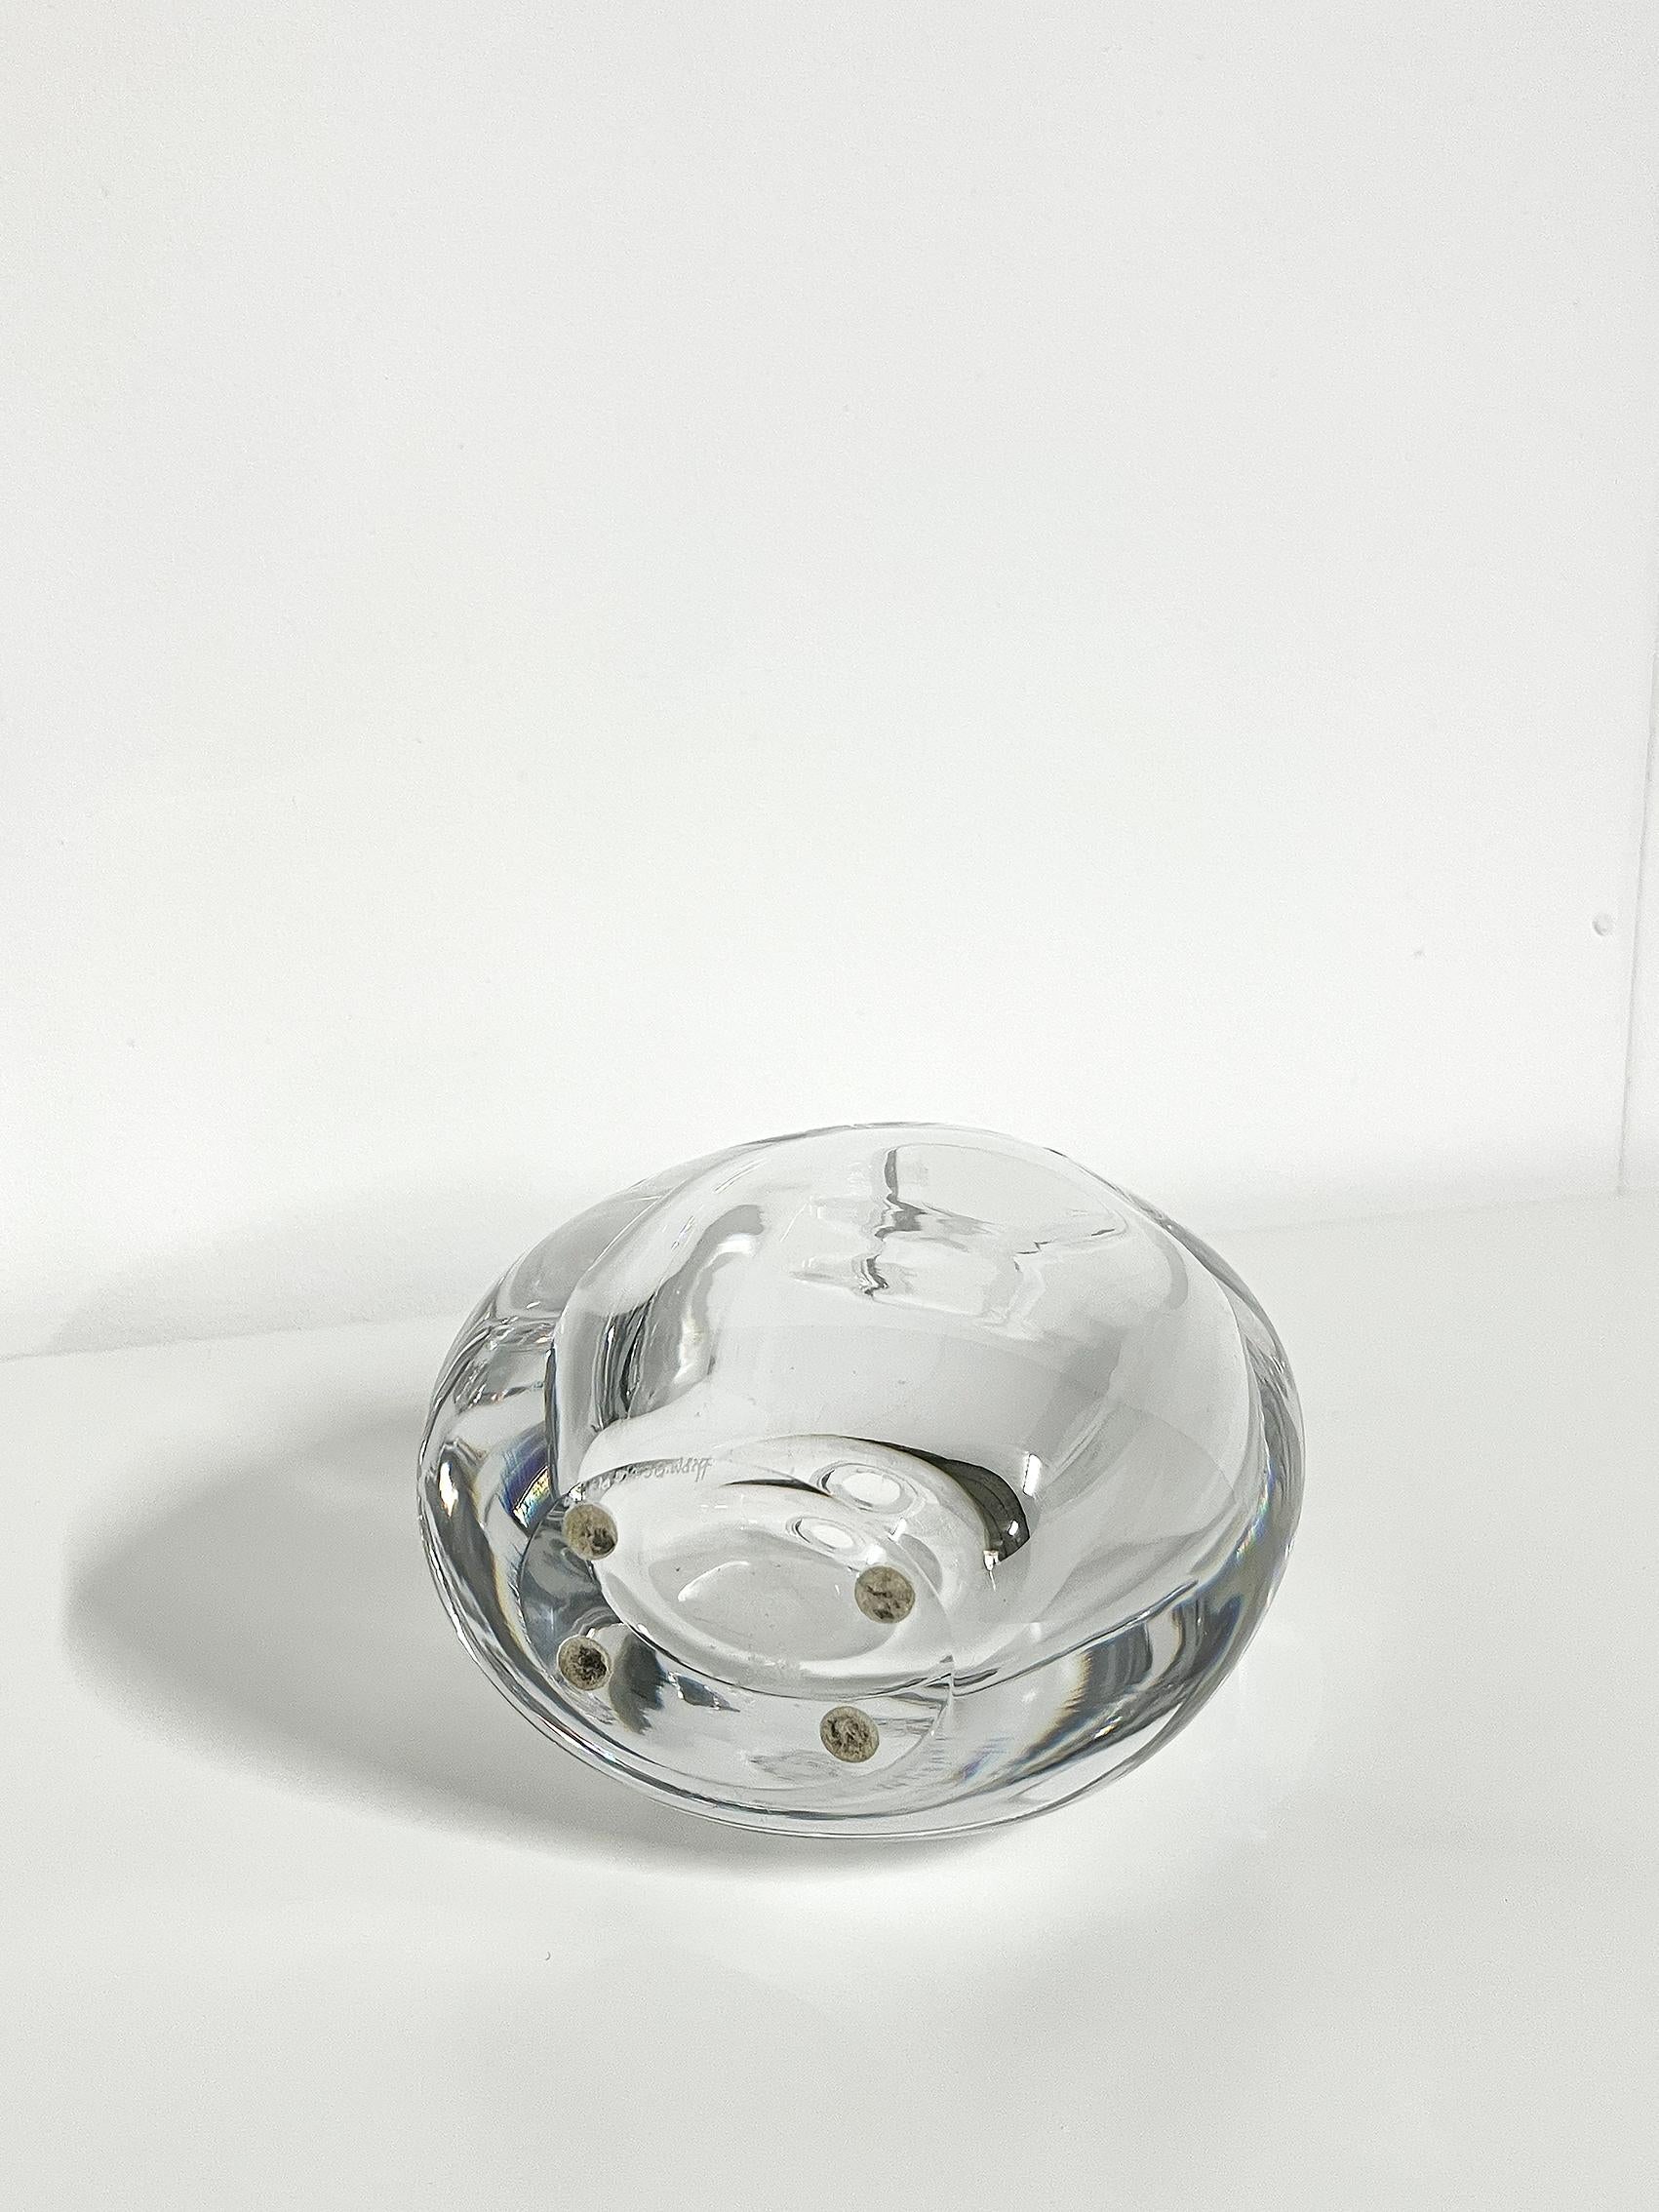 Scandinavian Modern Crystal Vase by Göran Wärff, Kosta ca 1978-1980 For Sale 3